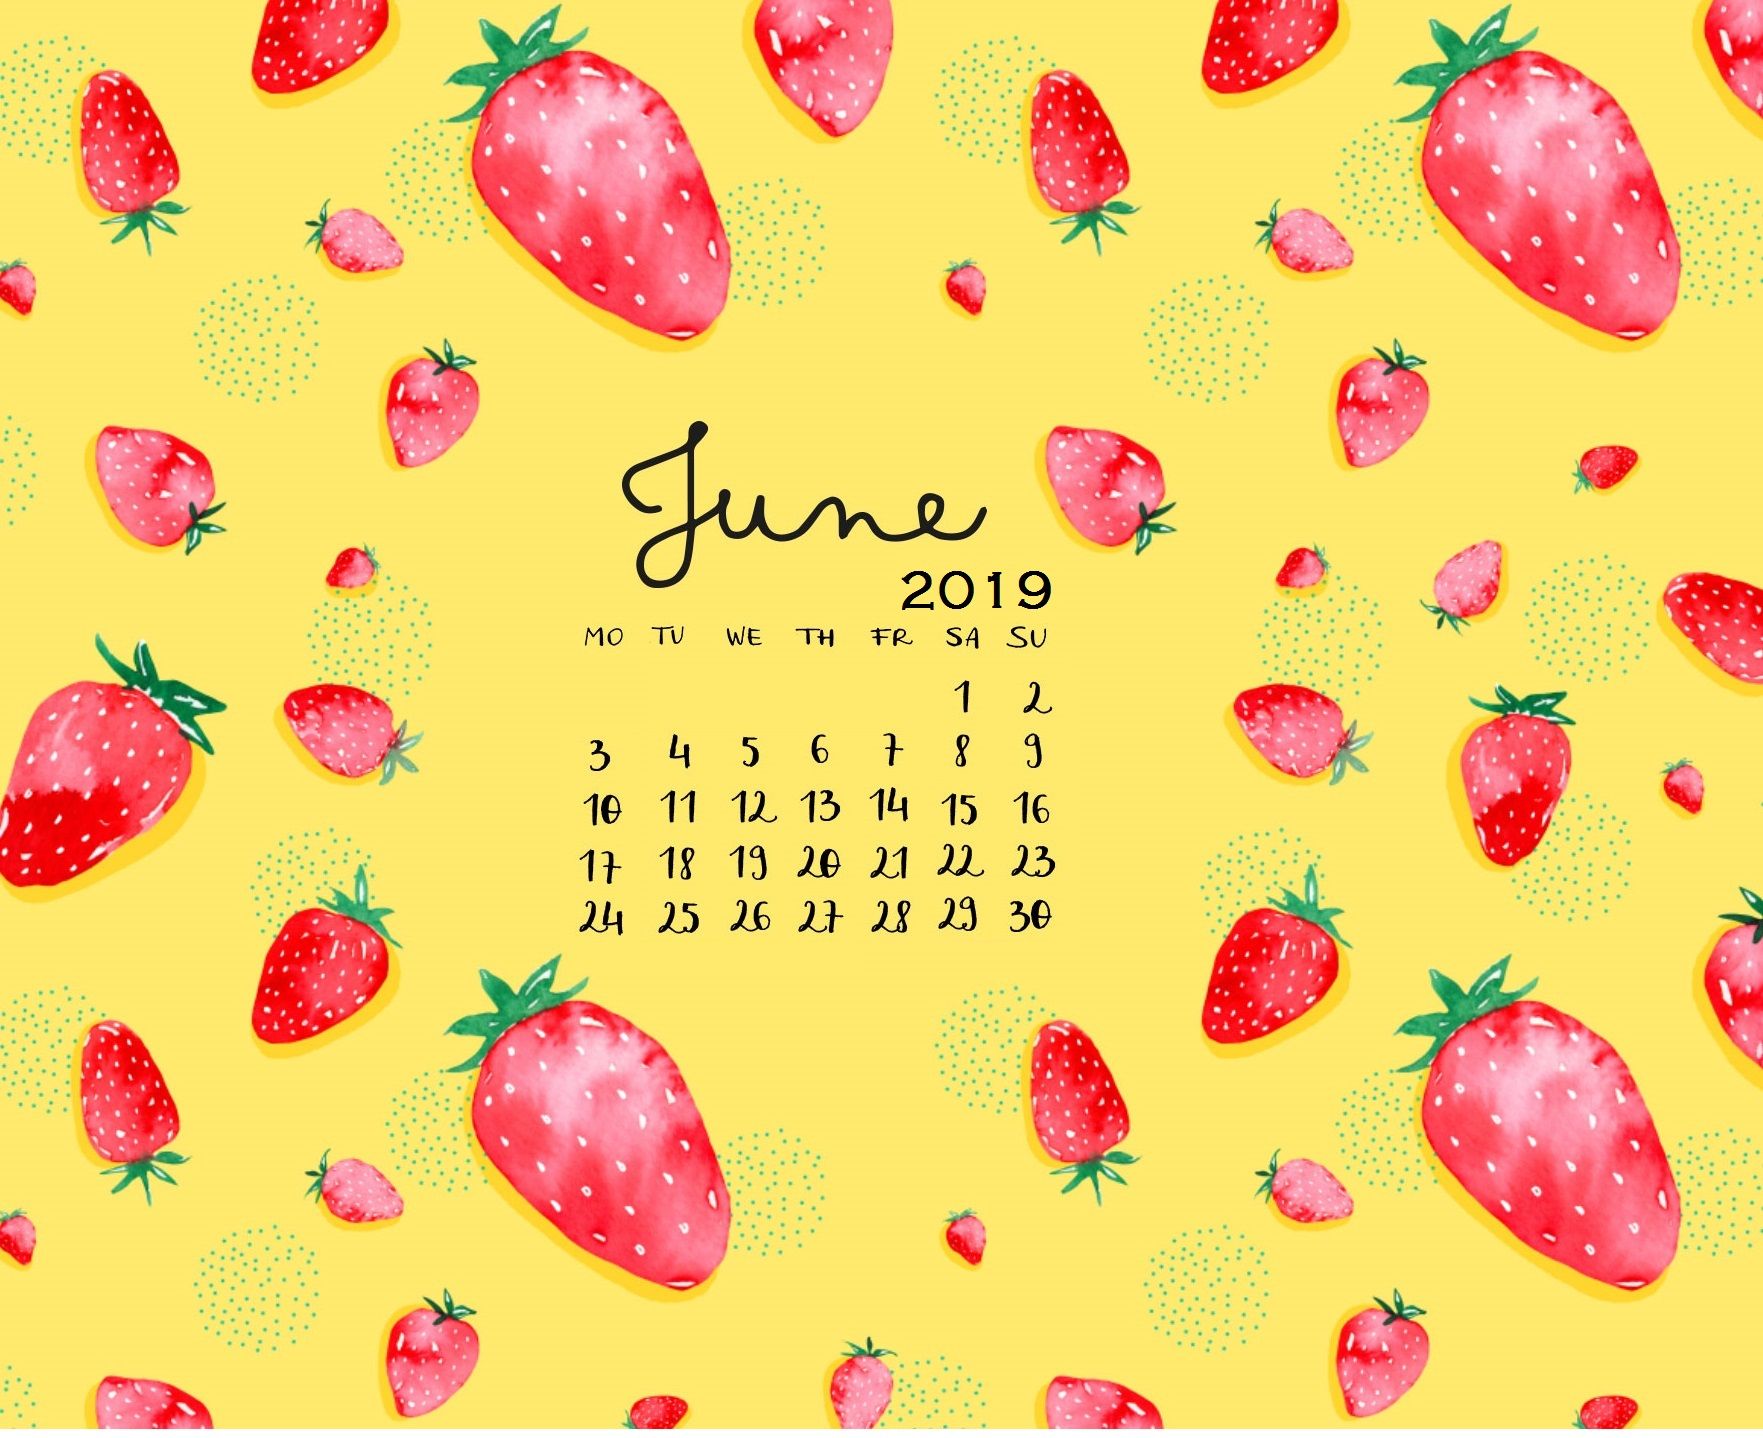 🔥 Download Cute June Calendar Floral Wallpaper For Desktop Laptop by